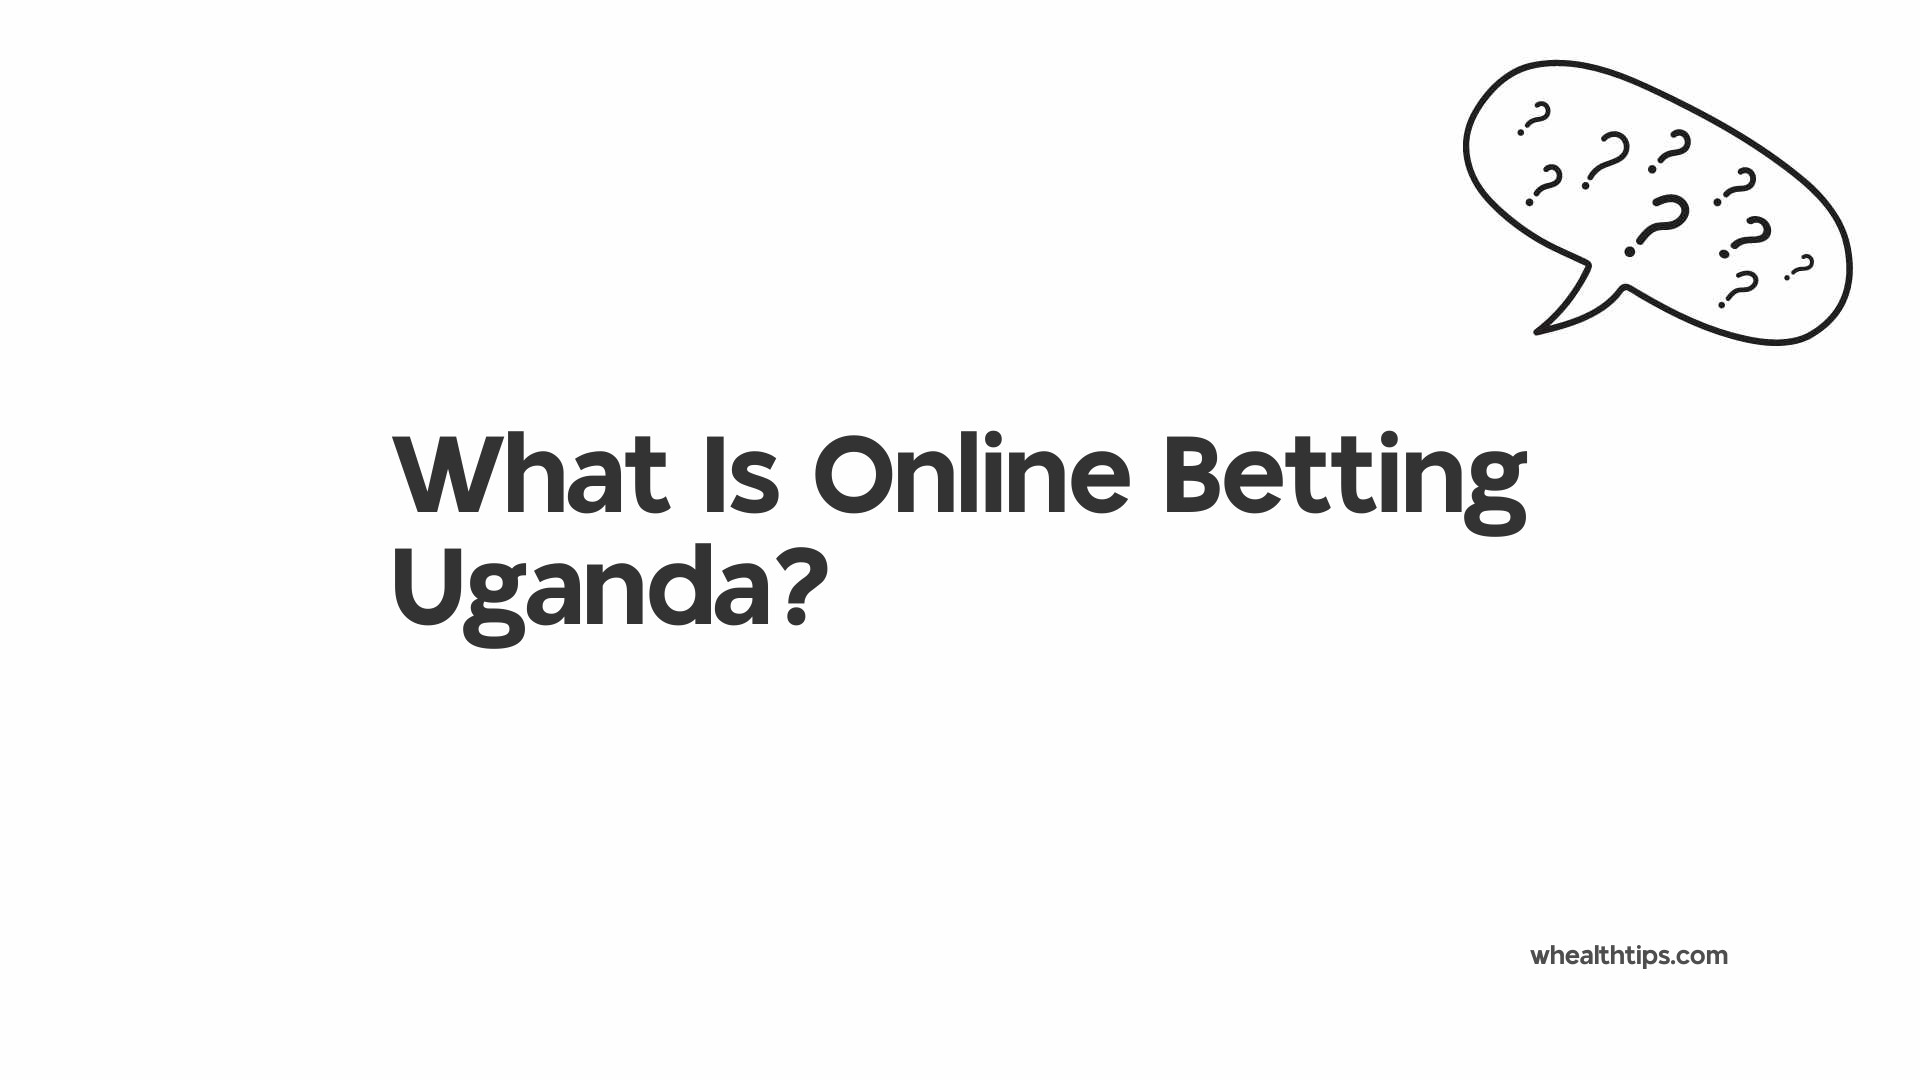 What Is Online Betting Uganda?